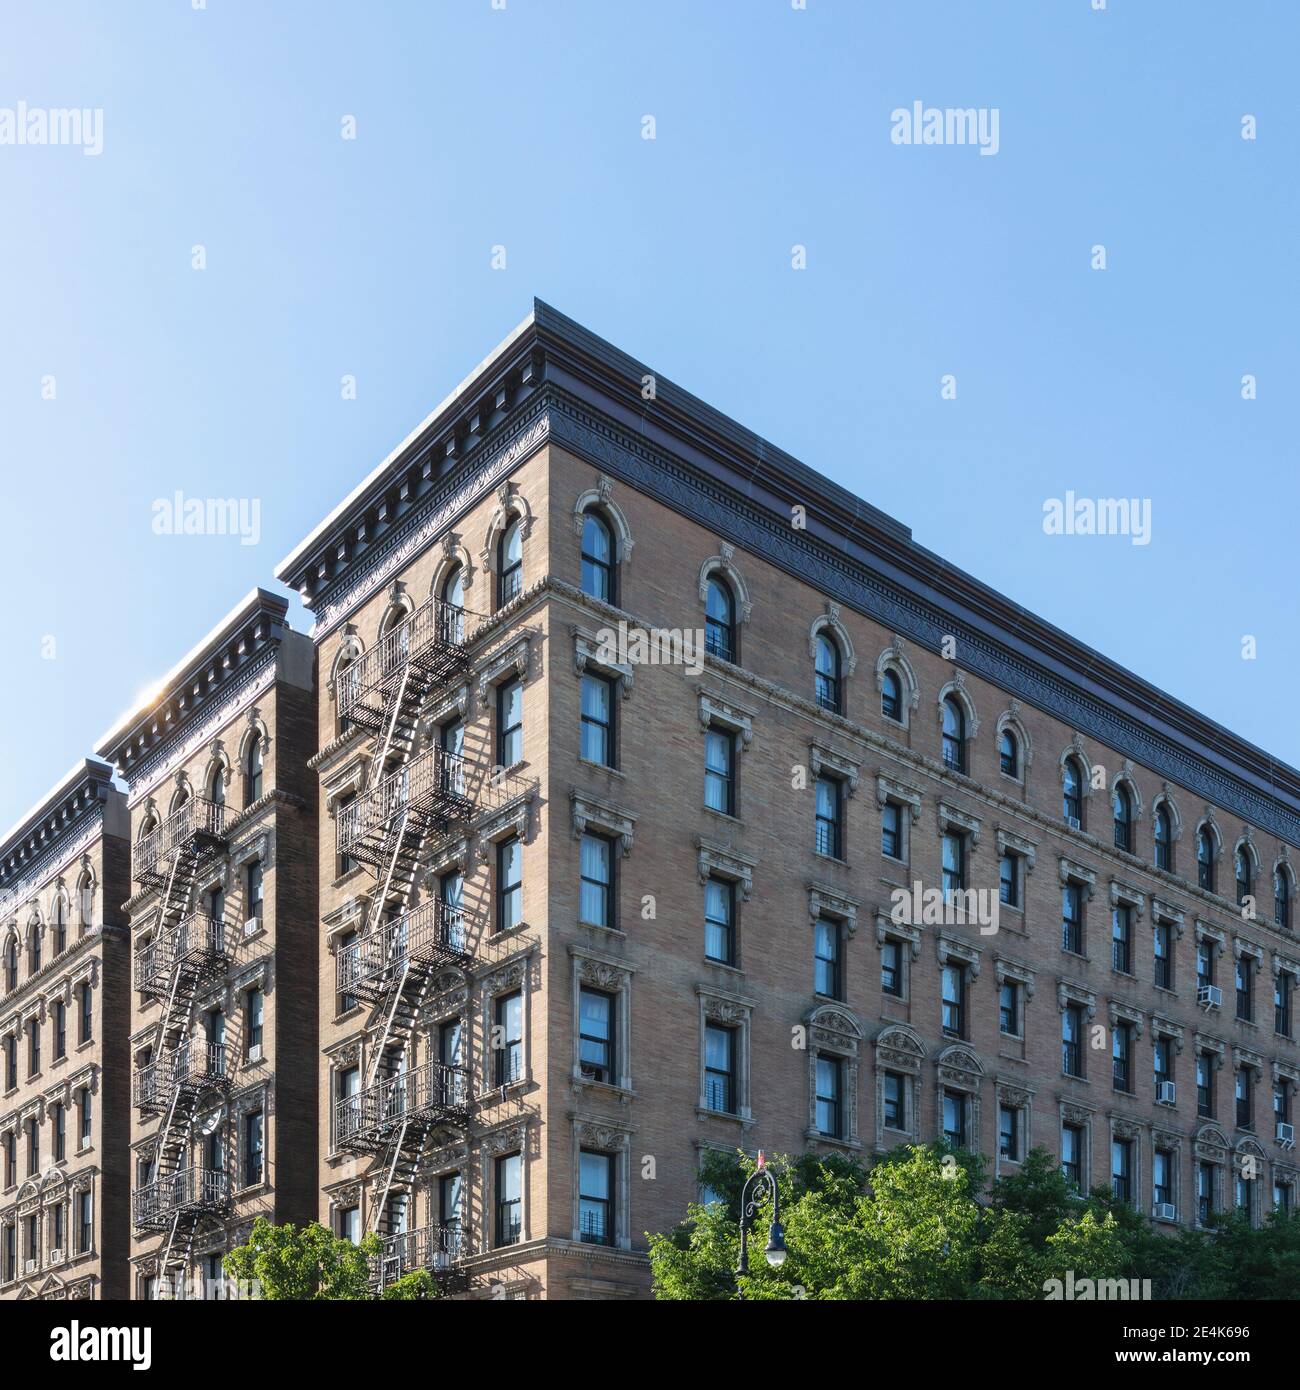 USA, New York, New York City, Apartment building exterior in Harlem Stock Photo